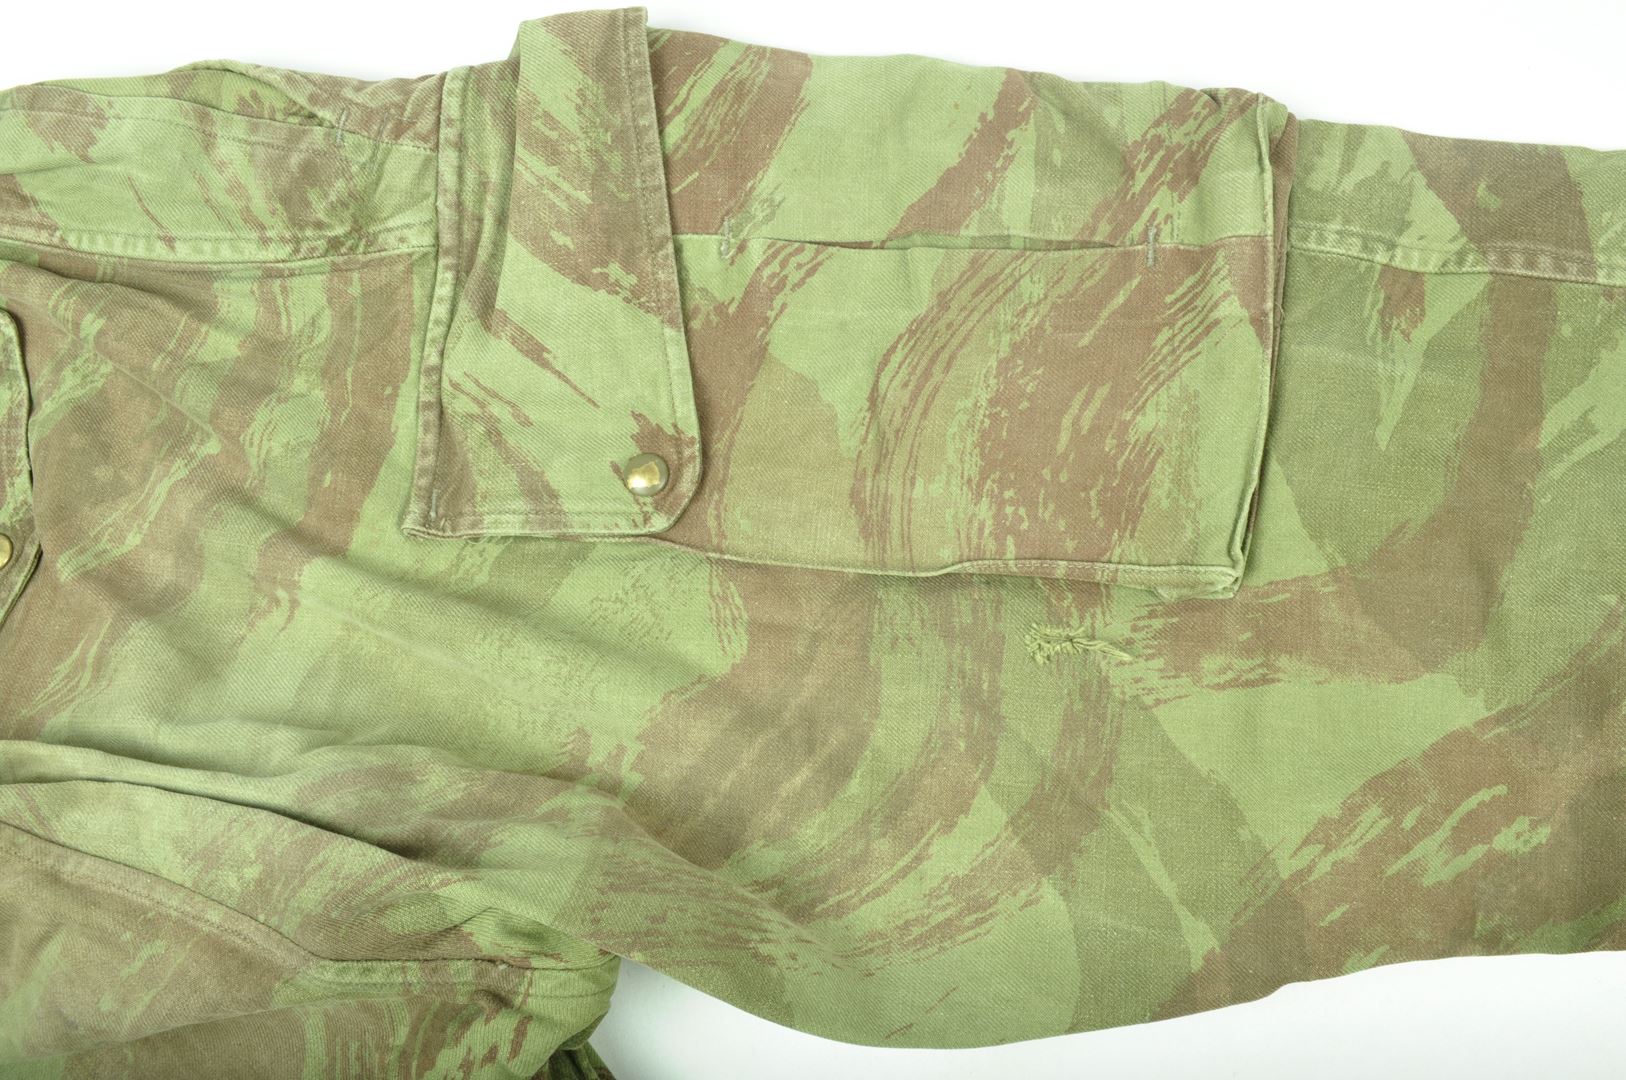 Pantalon TAP 47-53 camouflé